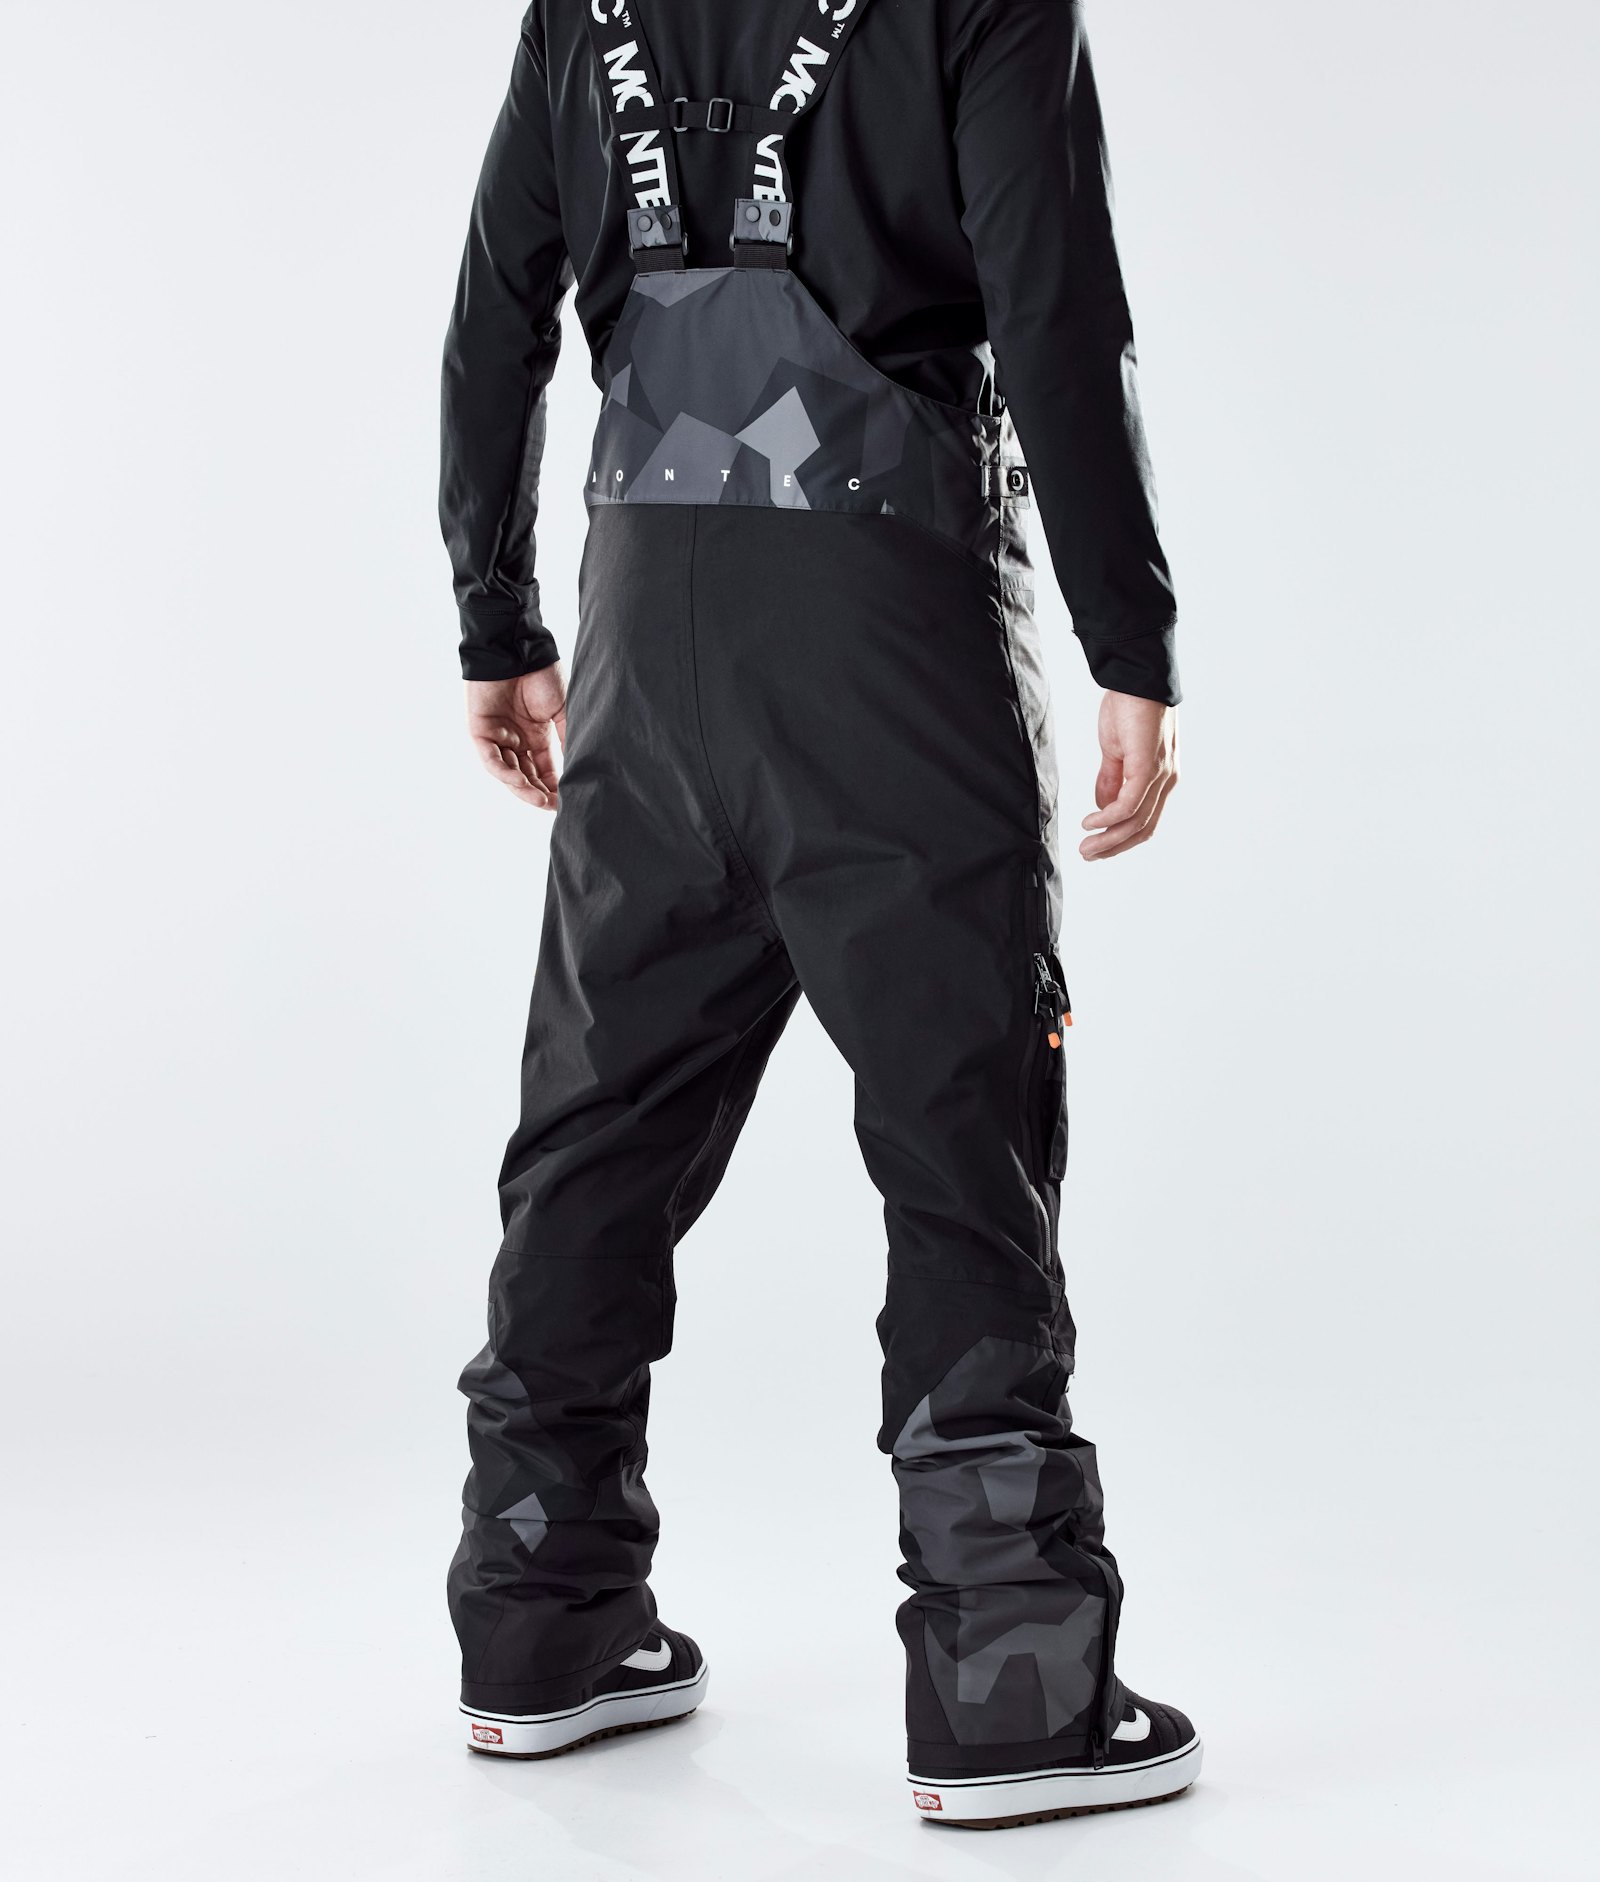 Fawk 2020 Snowboard Pants Men Night Camo/Black